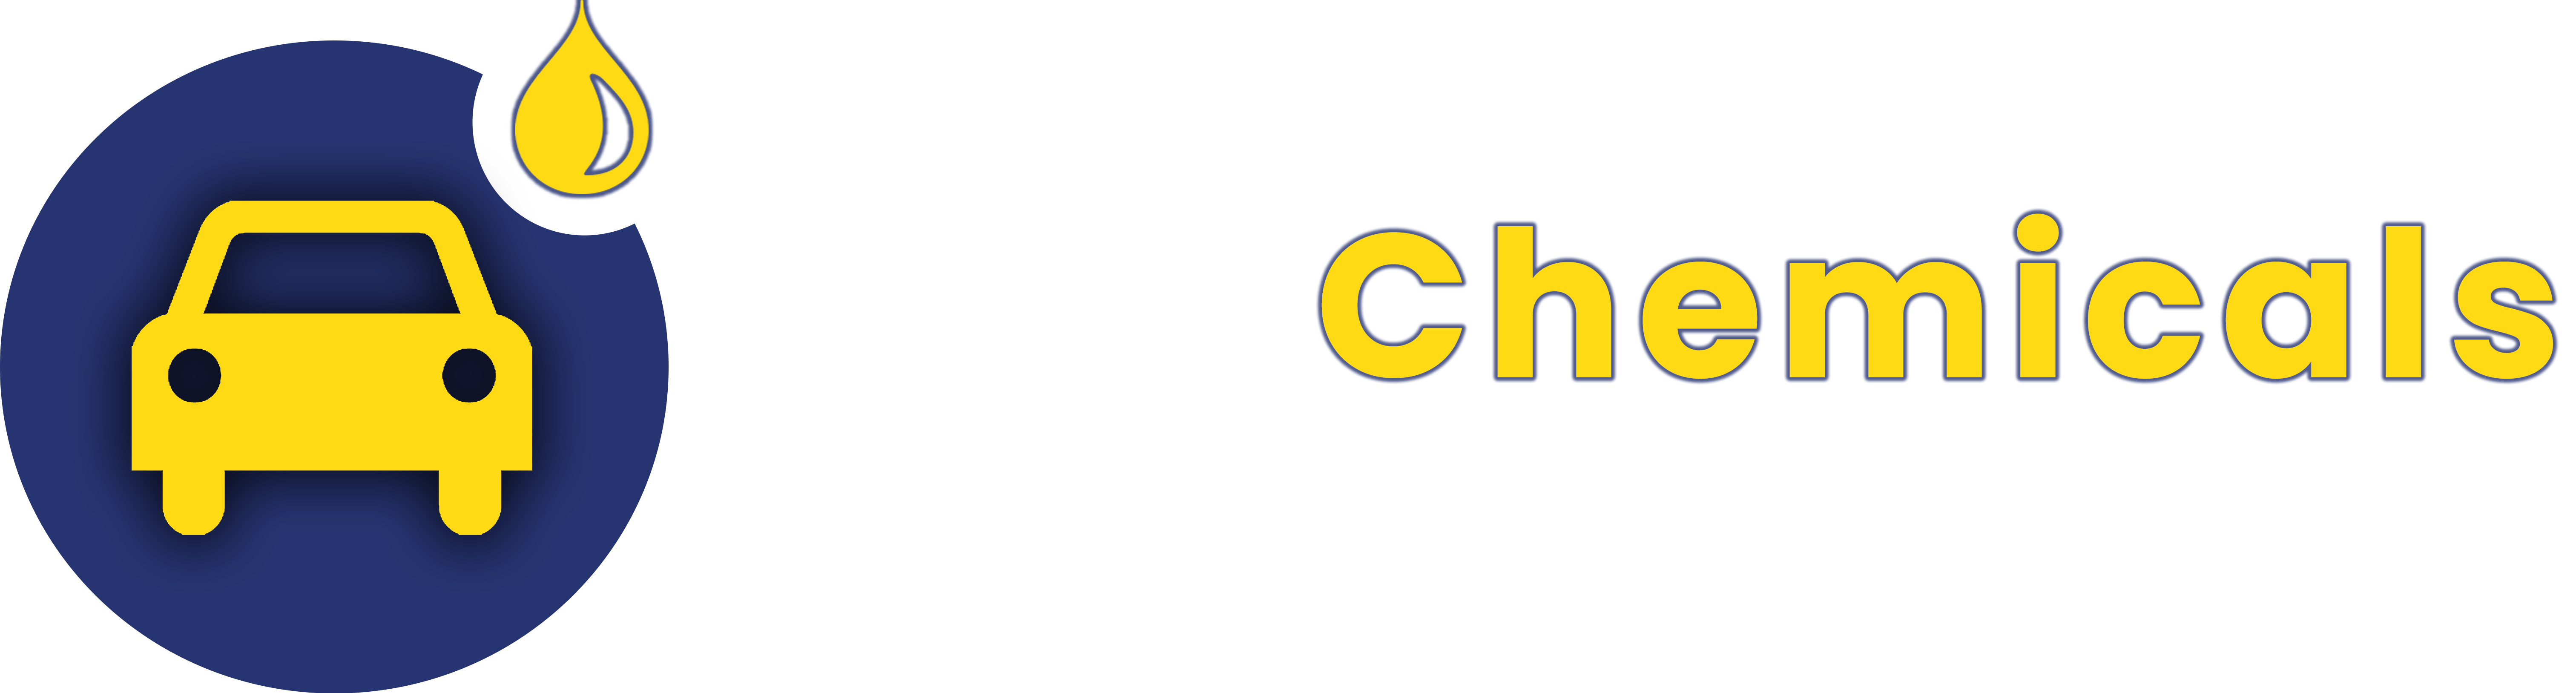 Car Wash & Detailing chemicals